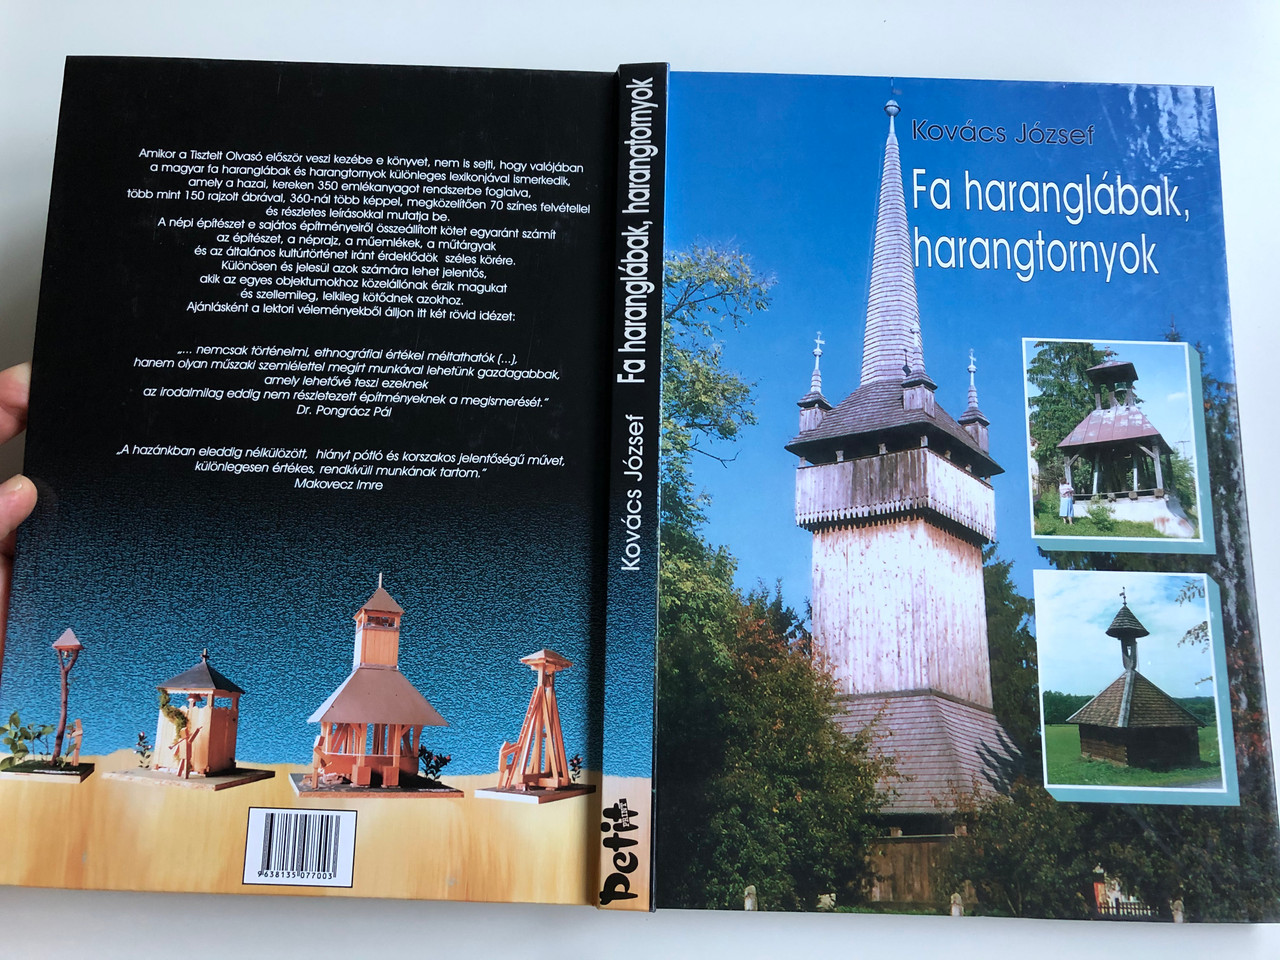 Fa haranglábak, harangtornyok by Kovács József / Wooden Church bell towers  in Hungary / Petit Print 2009 / Hardcover - bibleinmylanguage